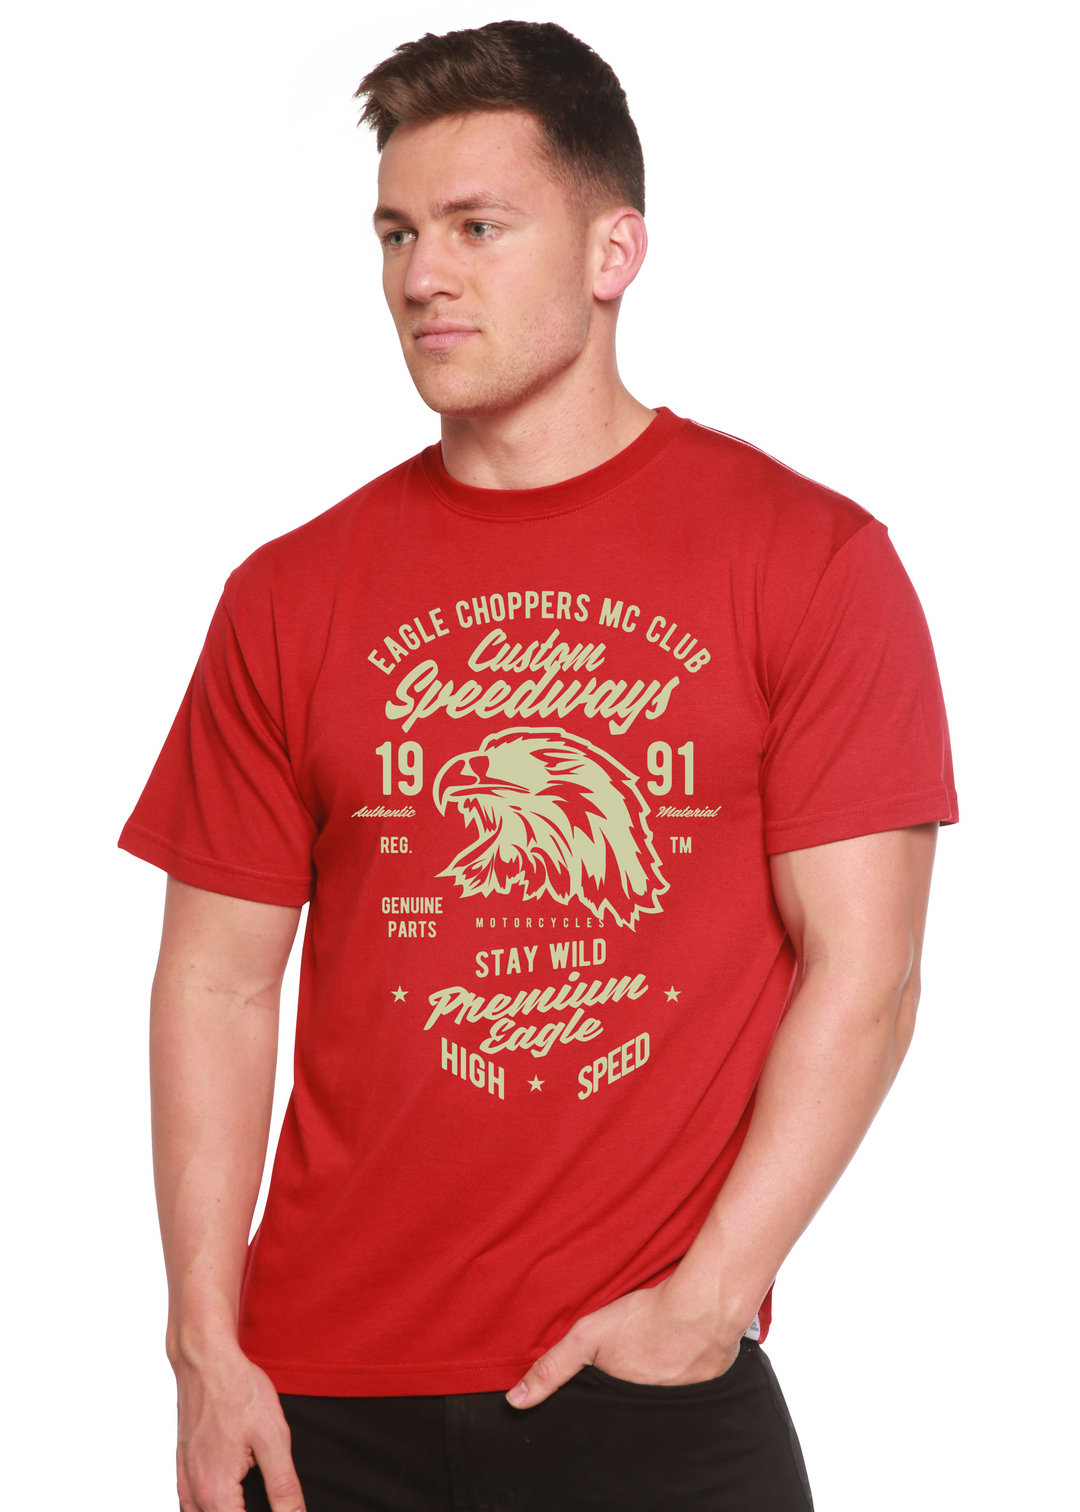 Custom Speedways Premium Eagle men's bamboo tshirt pompeian red